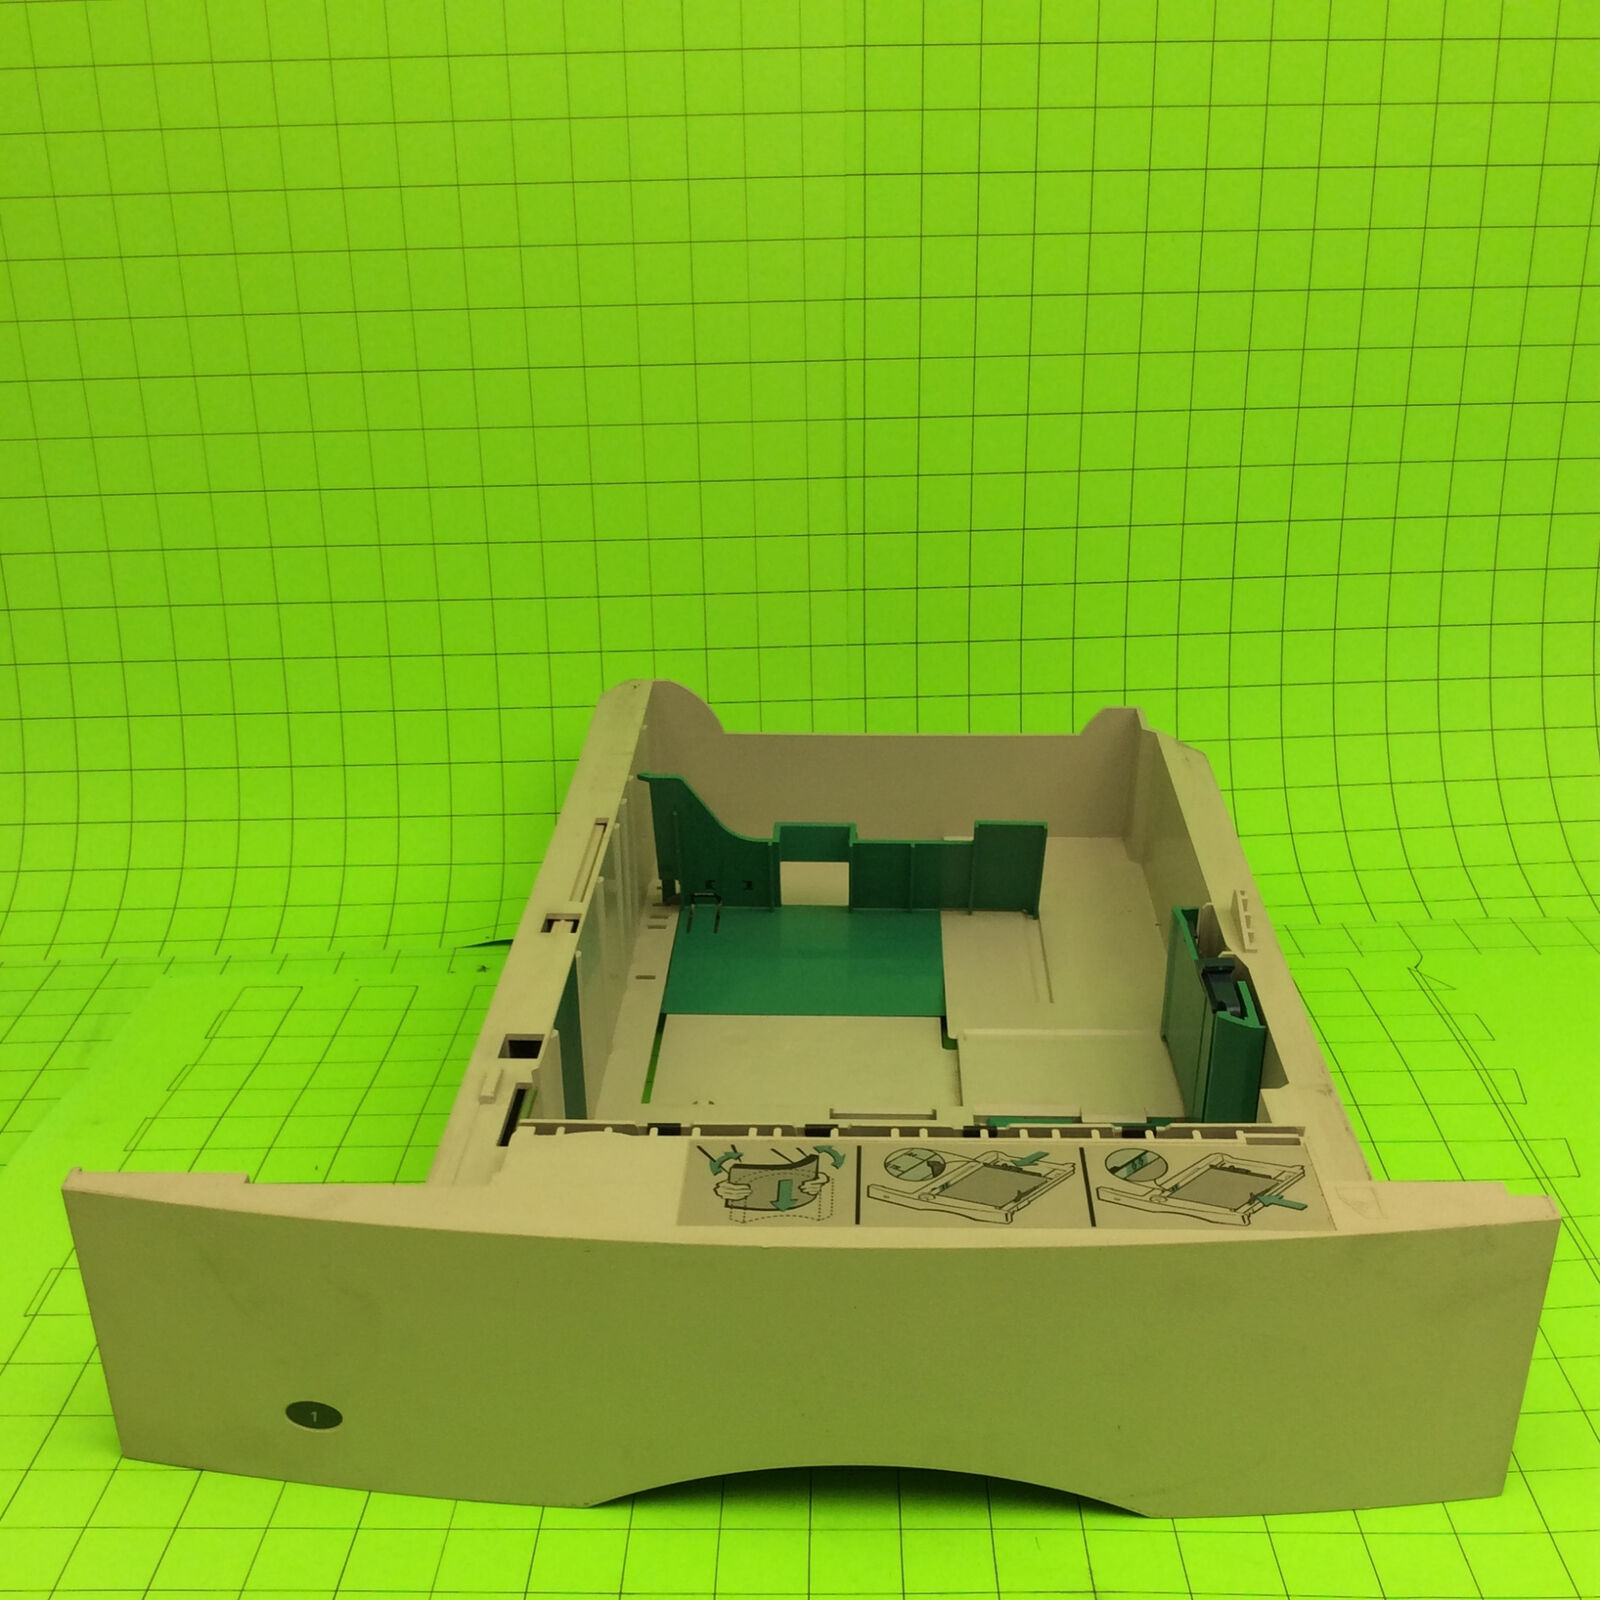 Adp Laserstation 1520 Laser Printer Beige/Green #1 Paper Tray